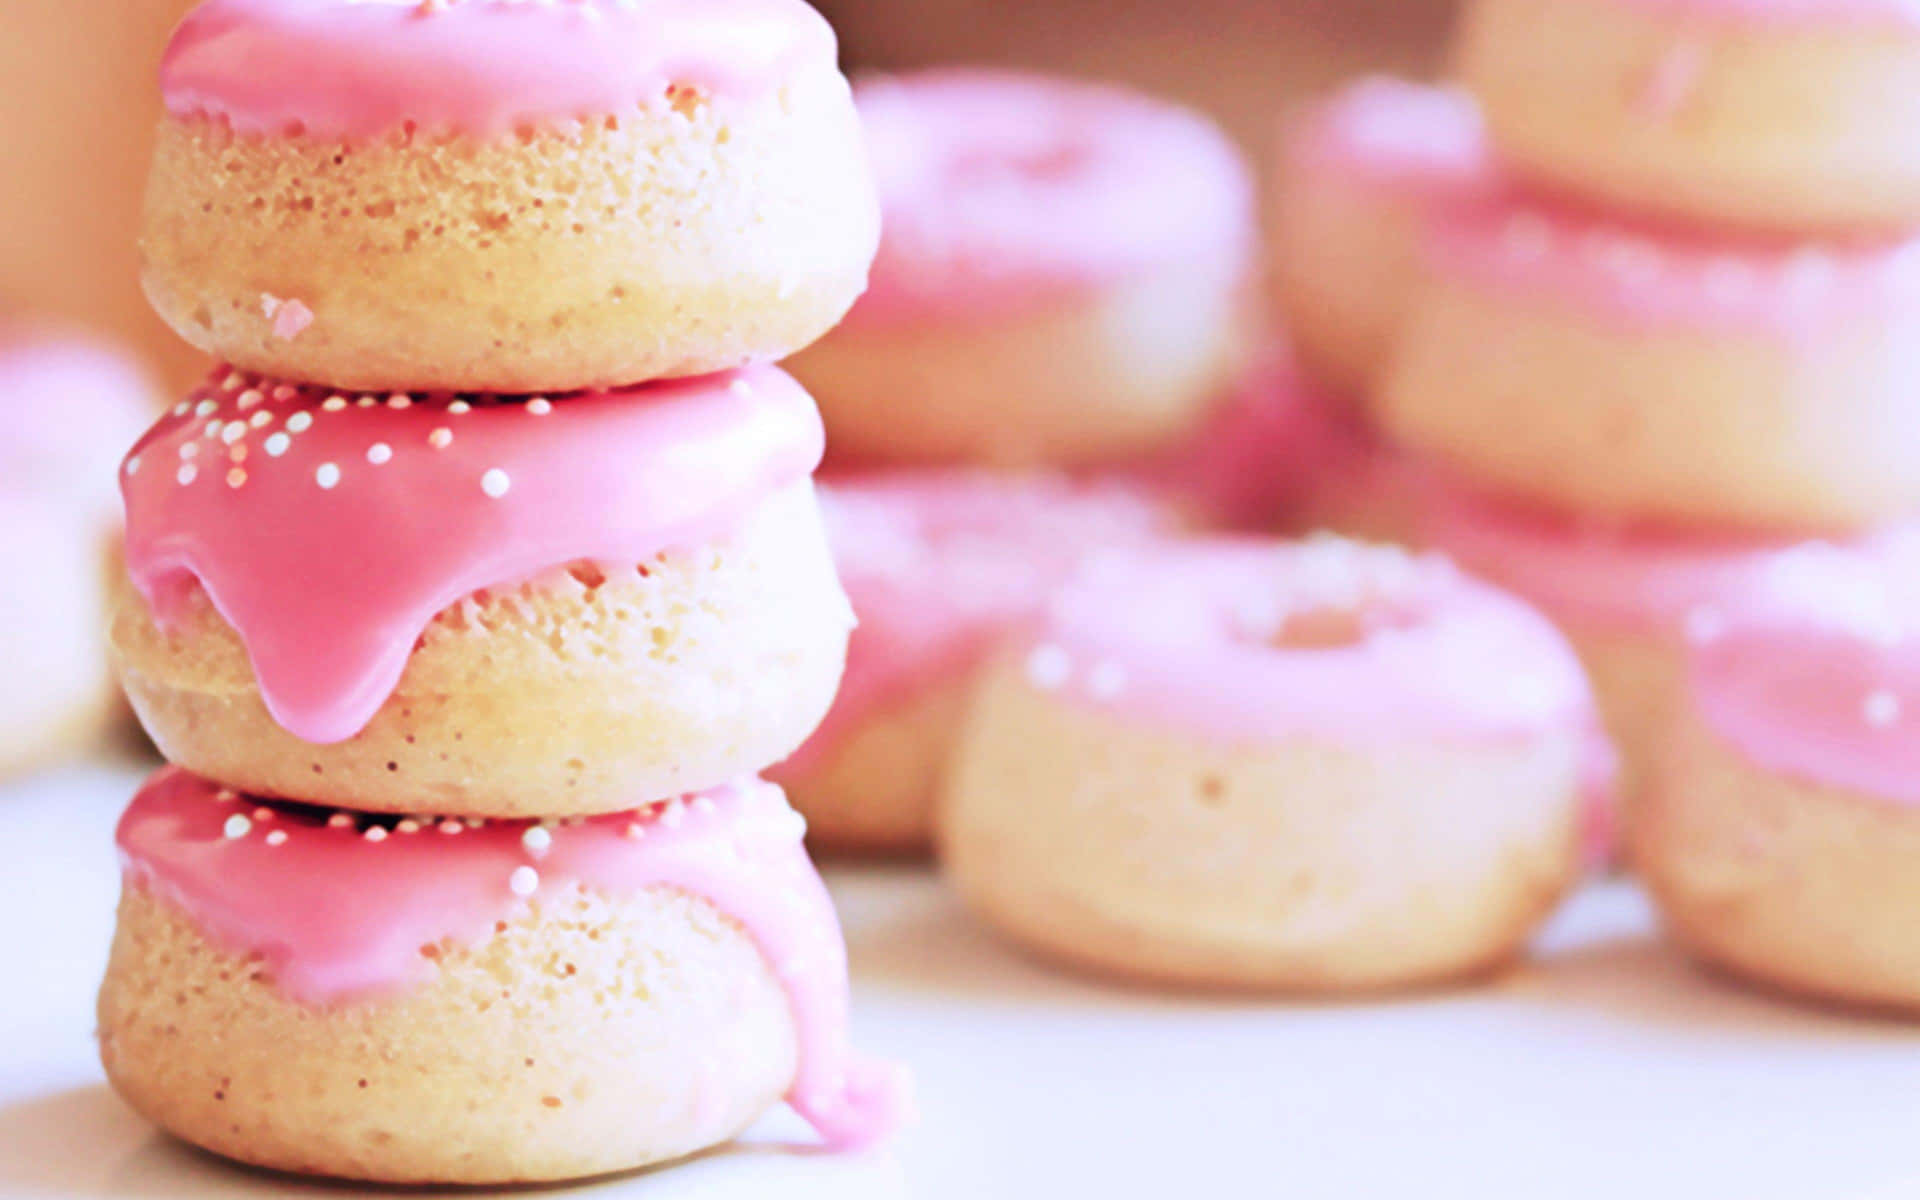 Enjoy a delicious assortment of donuts!